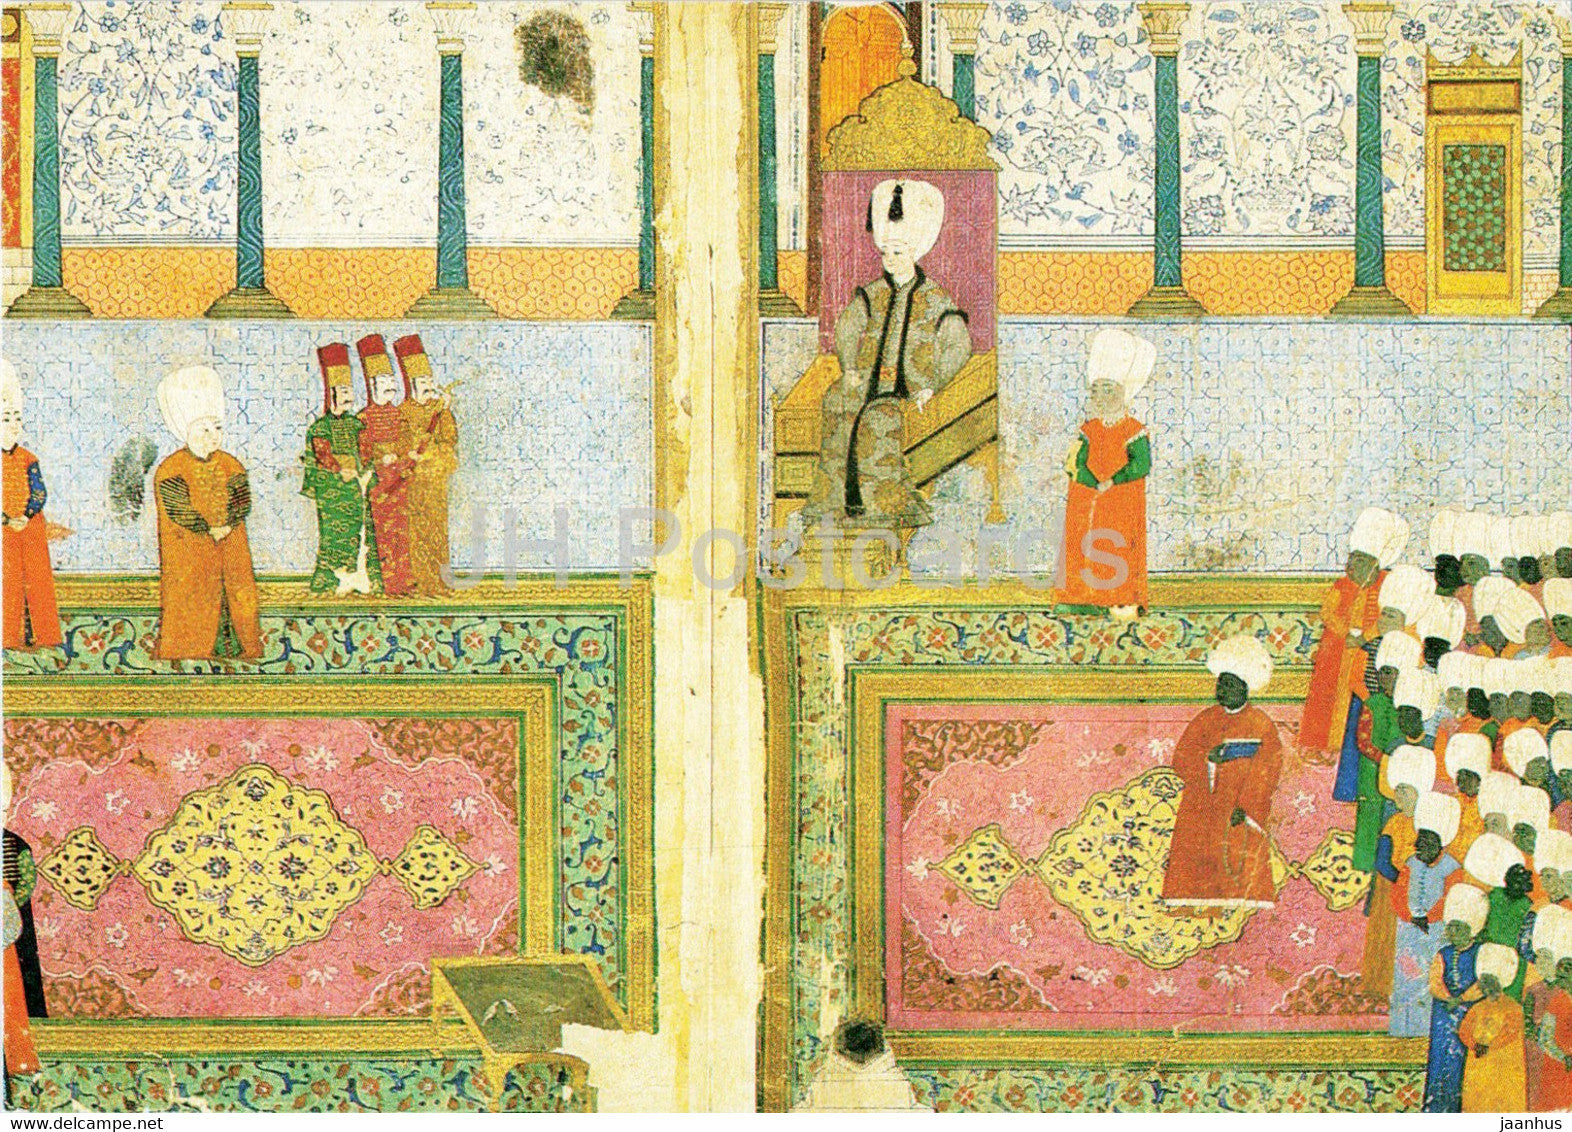 Sultan Osman II and His Court - book illustration - 797 - Turkey - Sweden - unused - JH Postcards